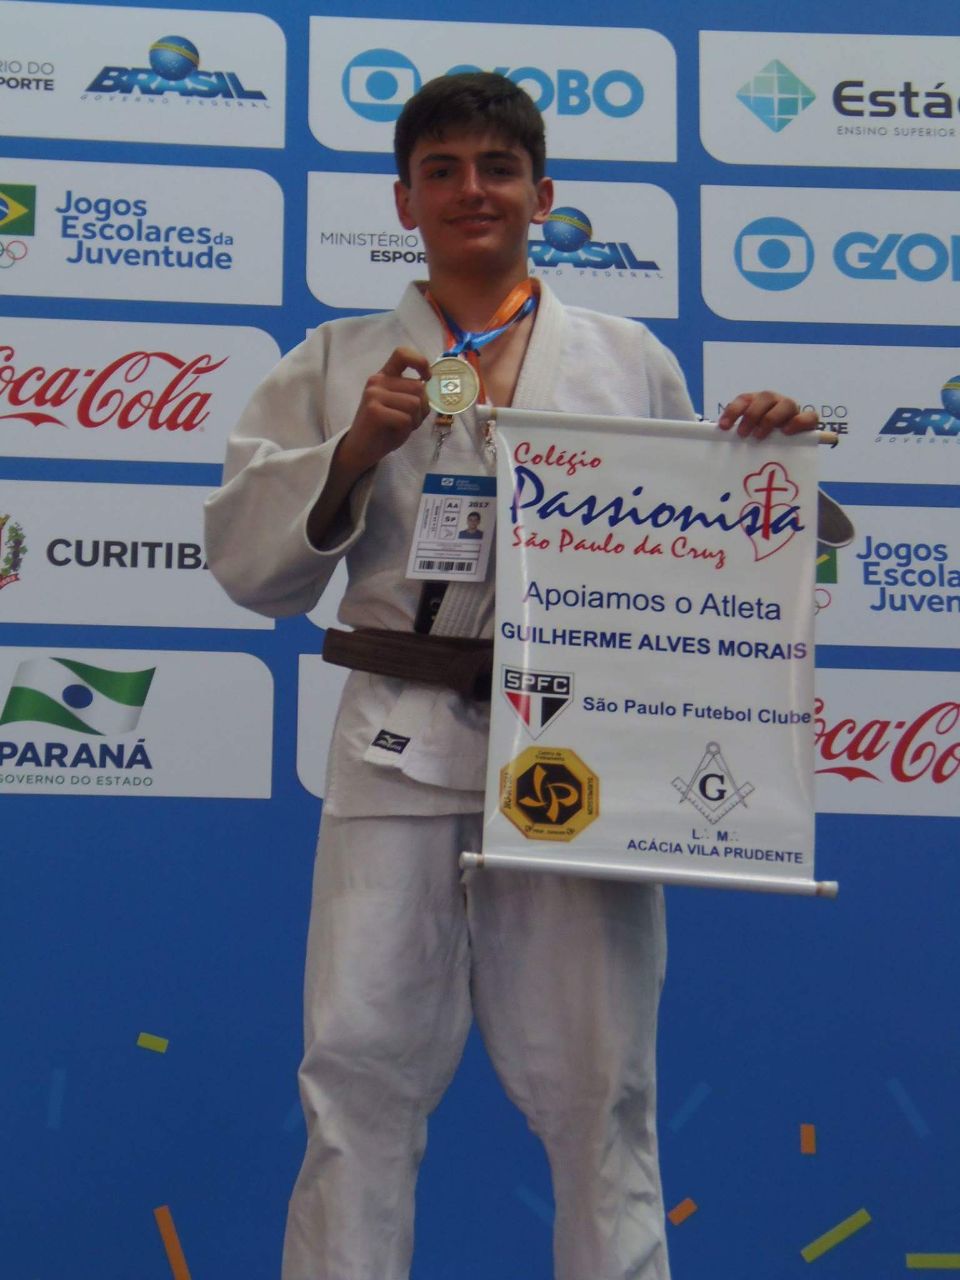 Judoca Guilherme - So Paulo da Cruz 